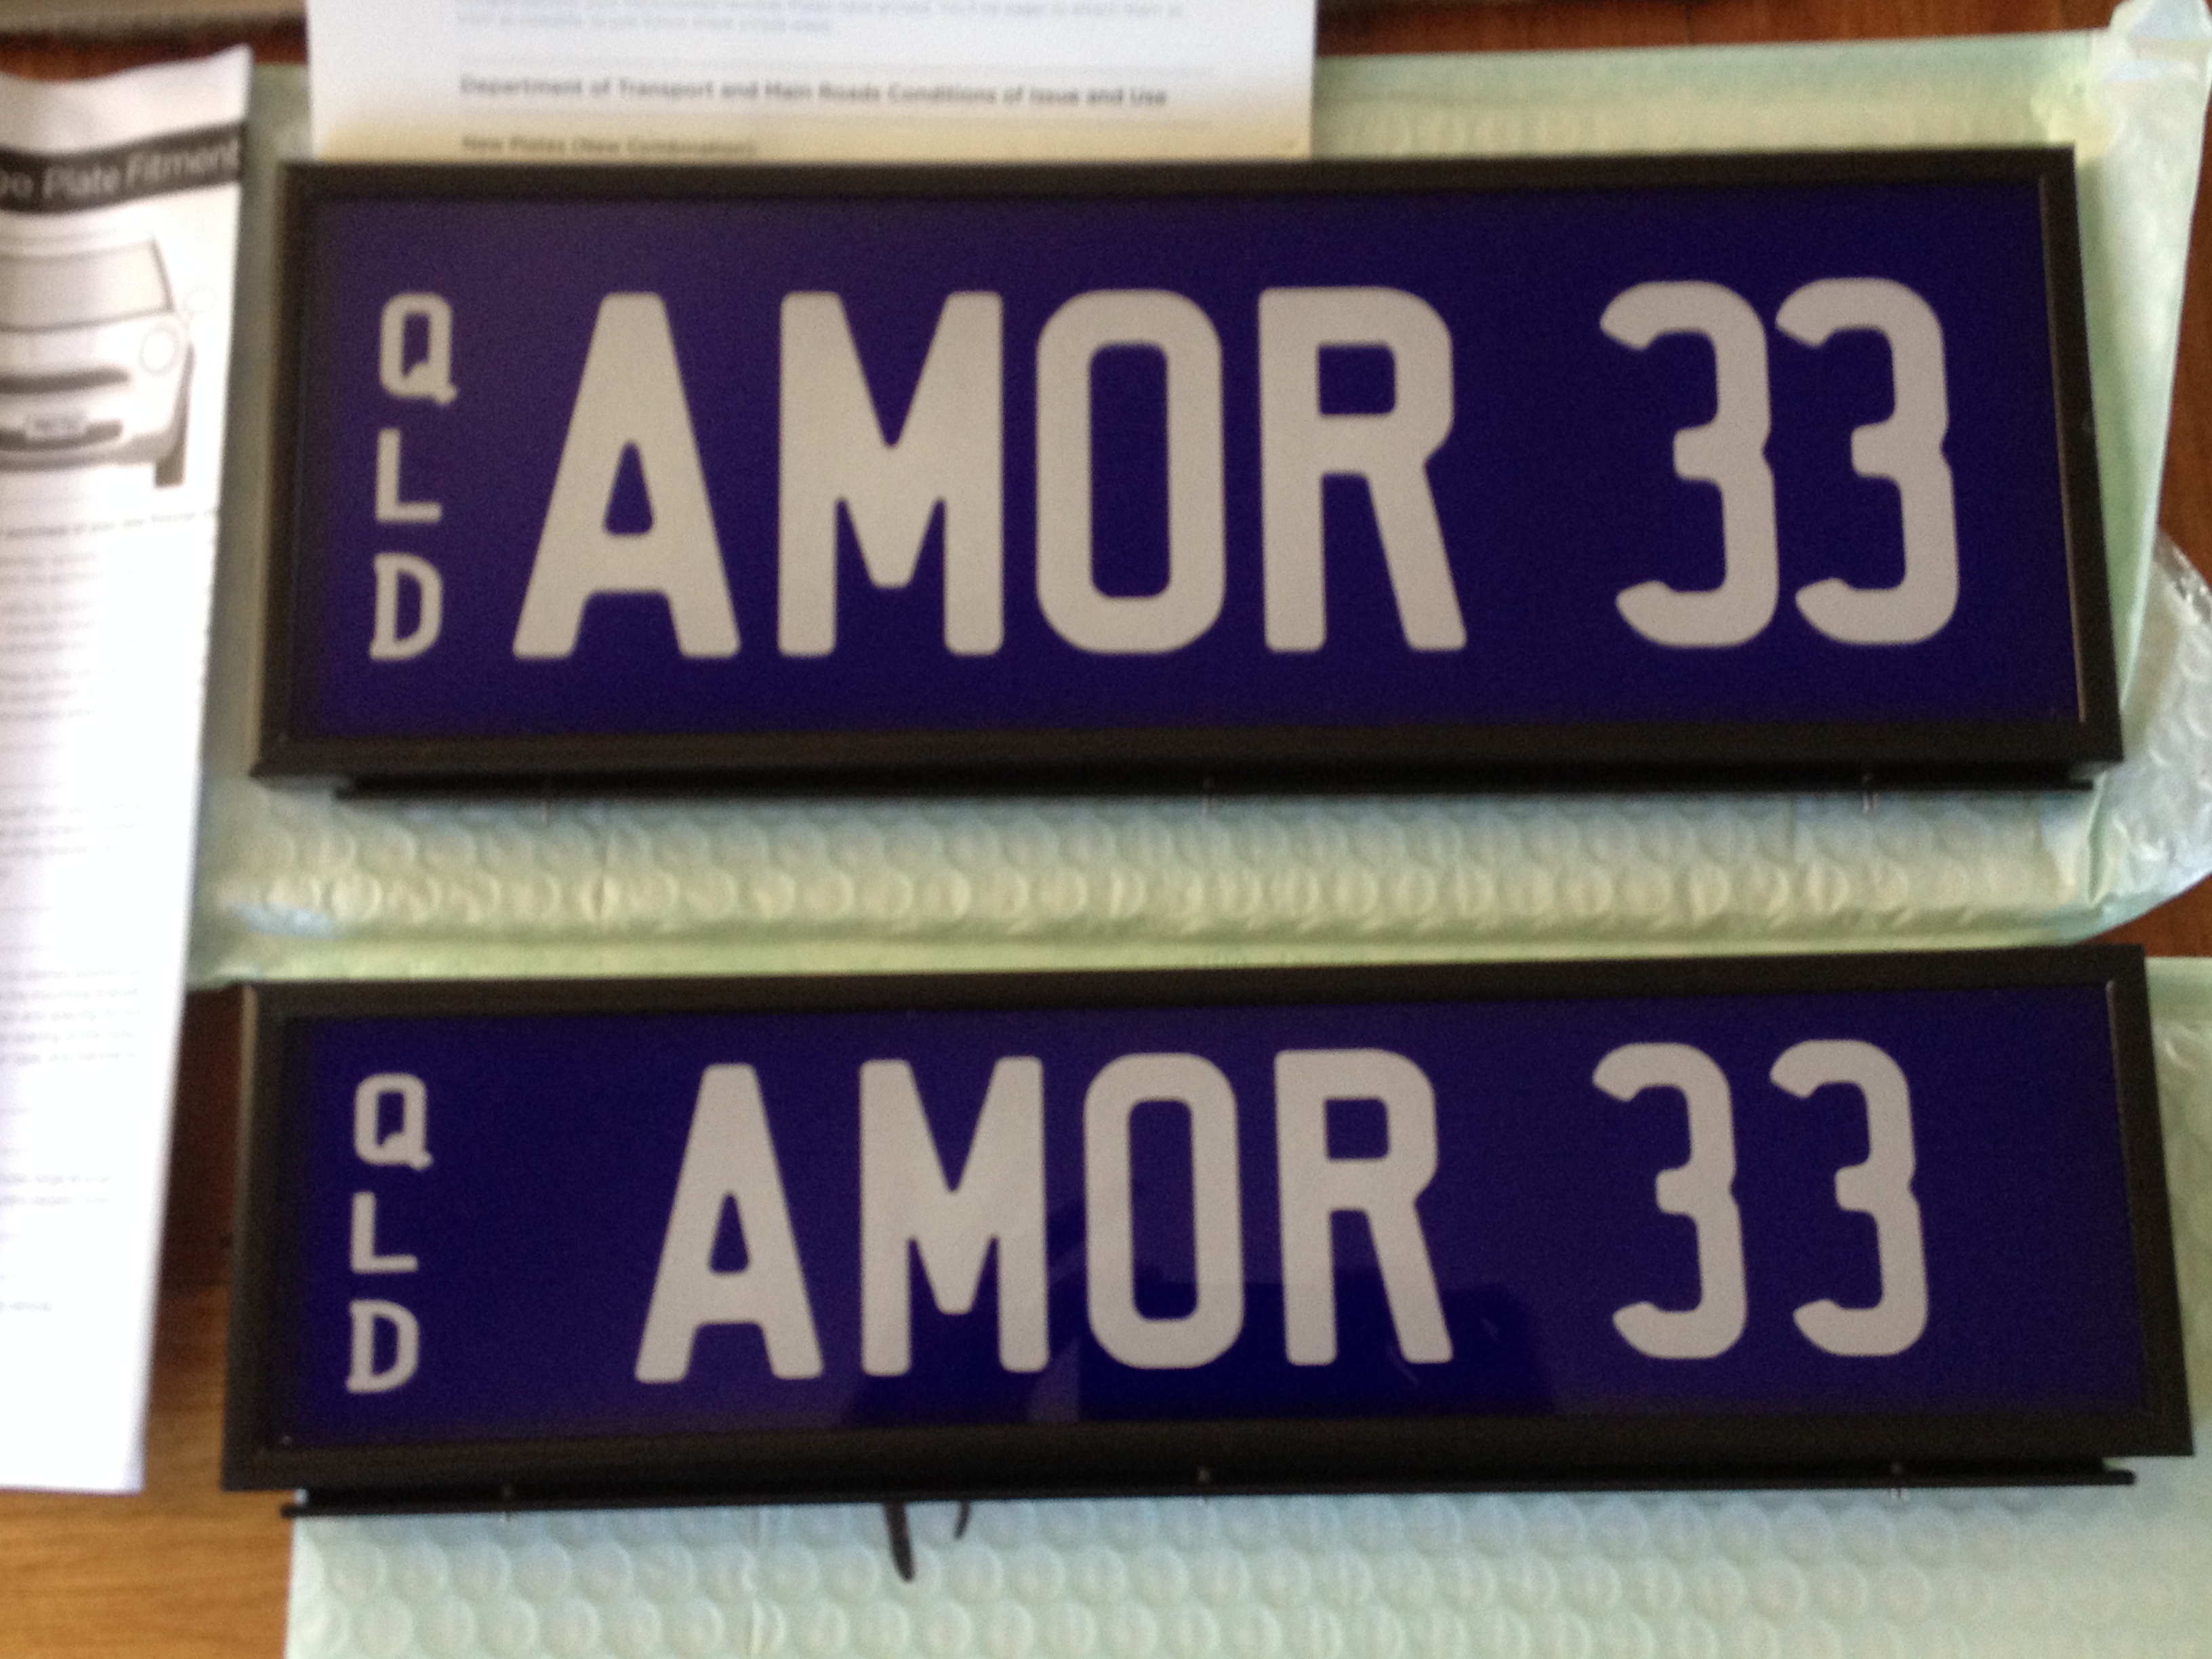 AMOR33  - Personalised Prestige Plates Brand New